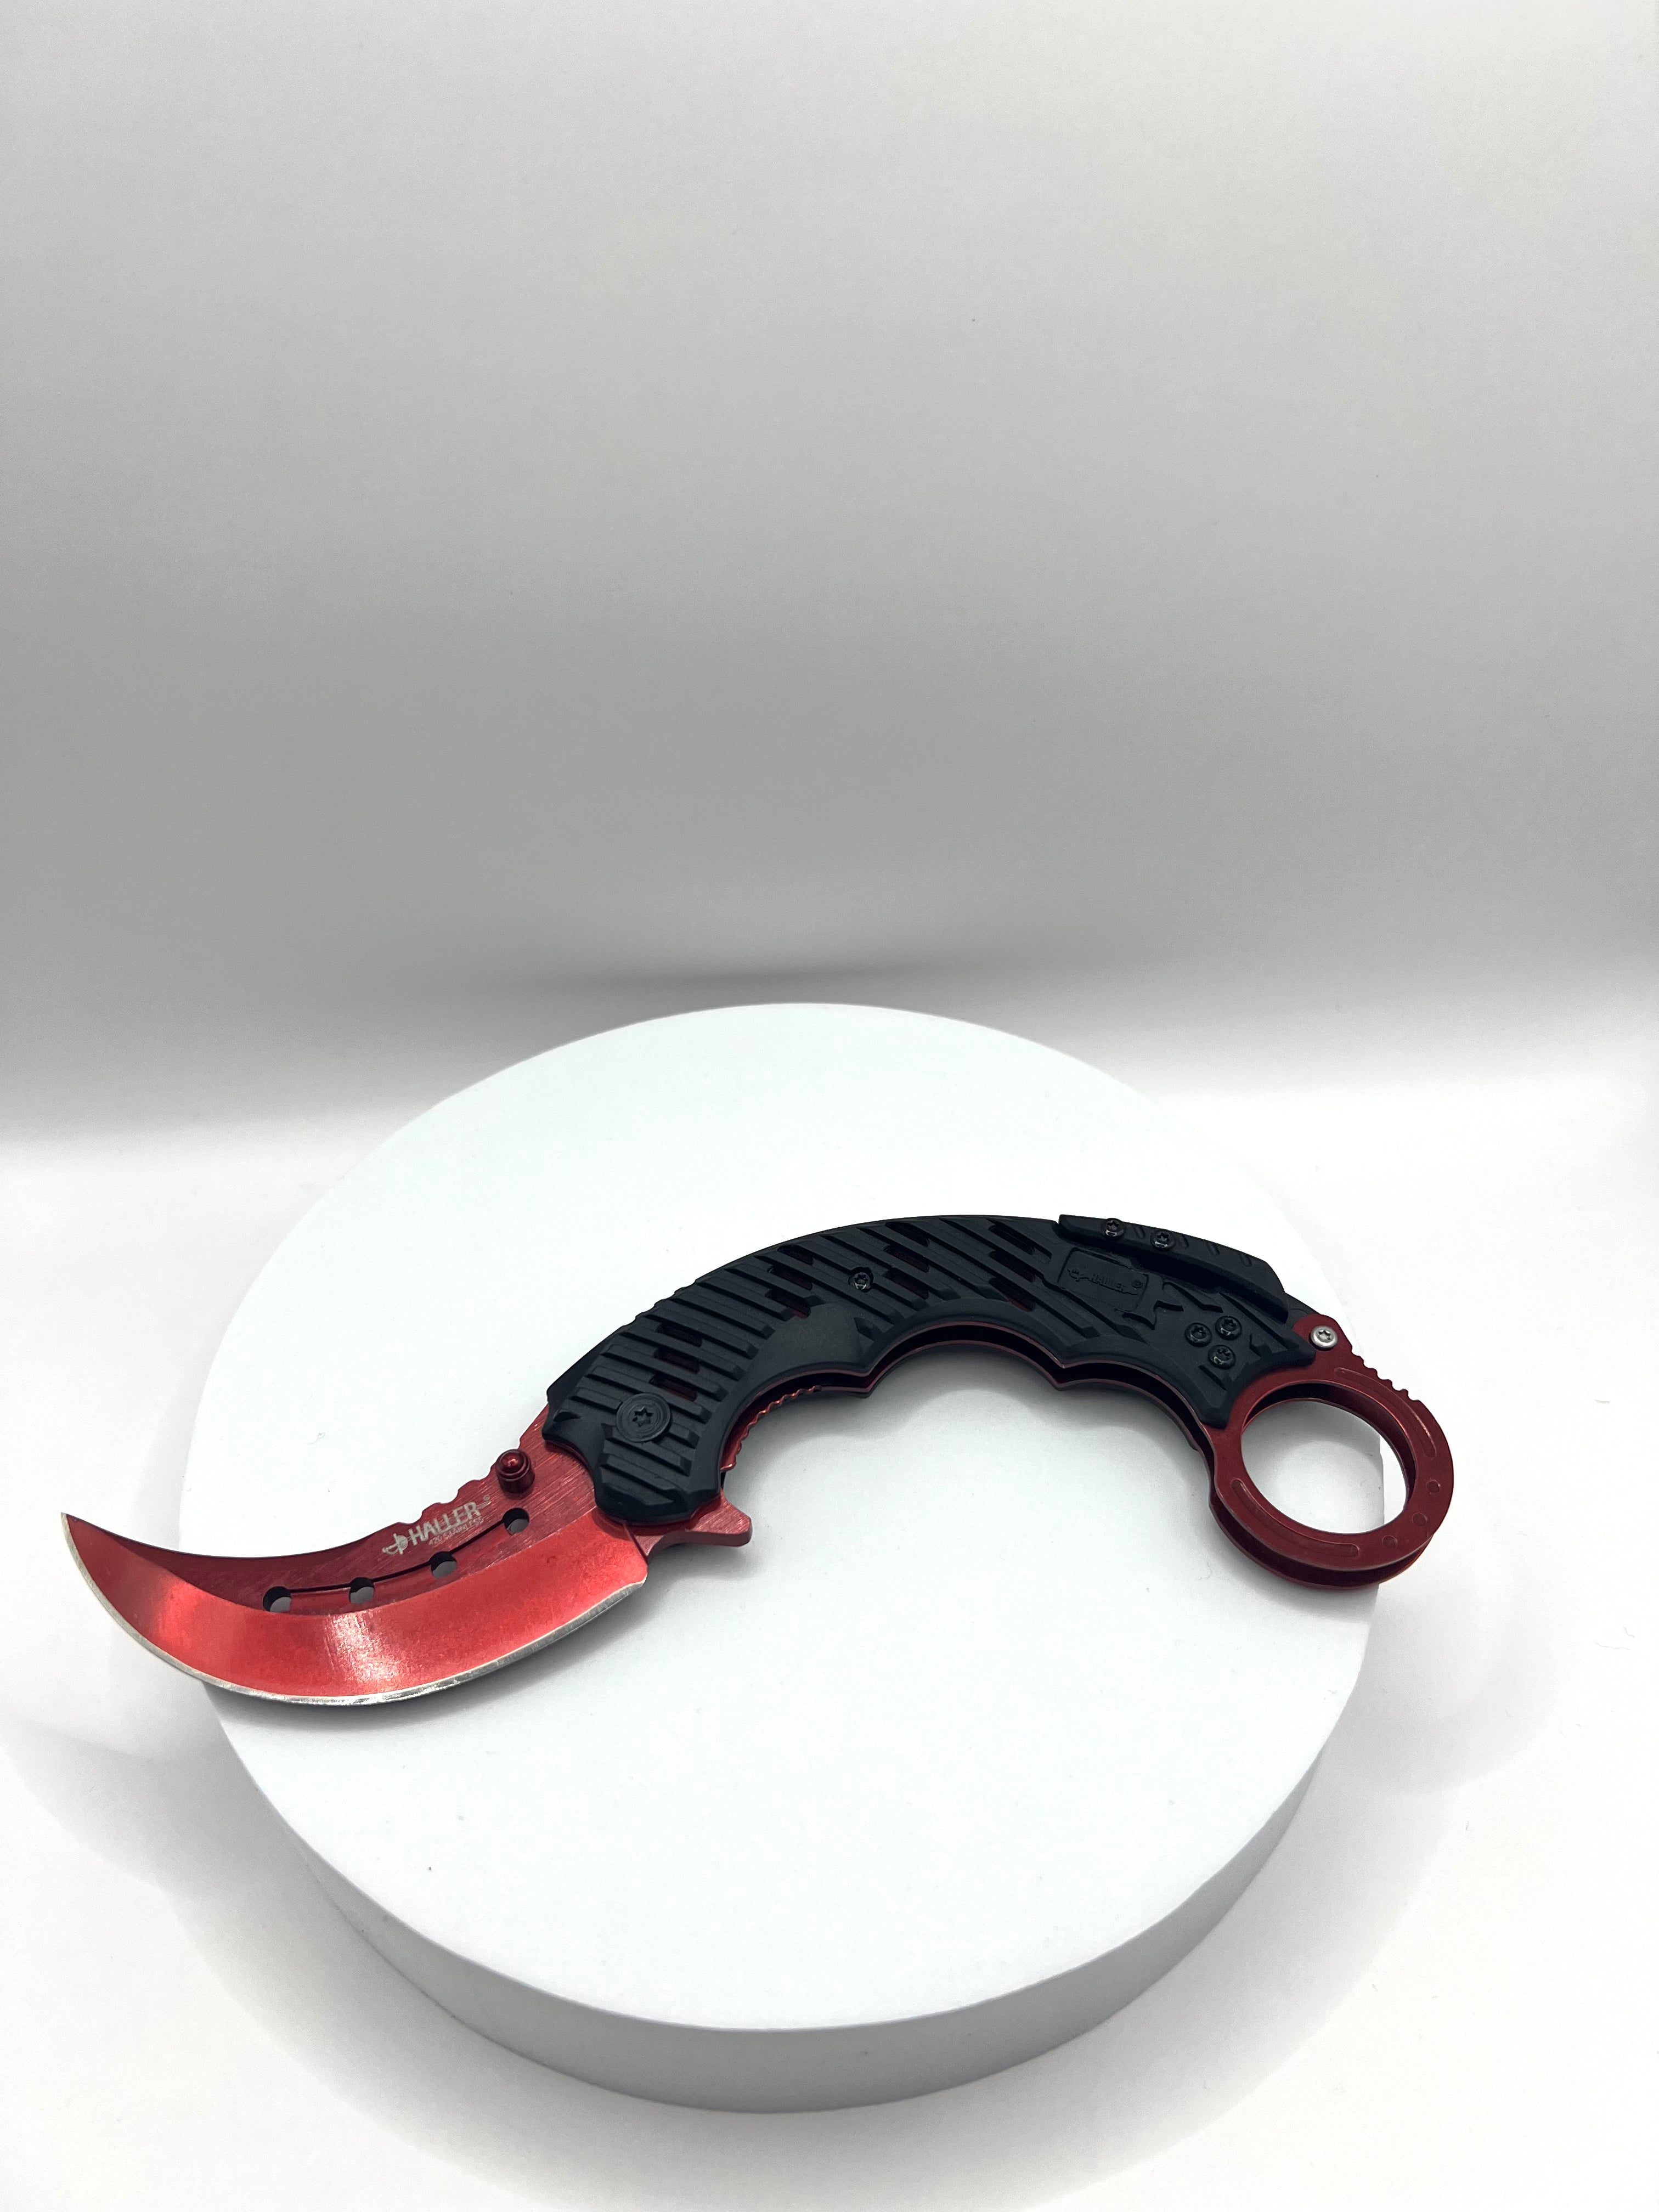 Karambit pocket knife in red